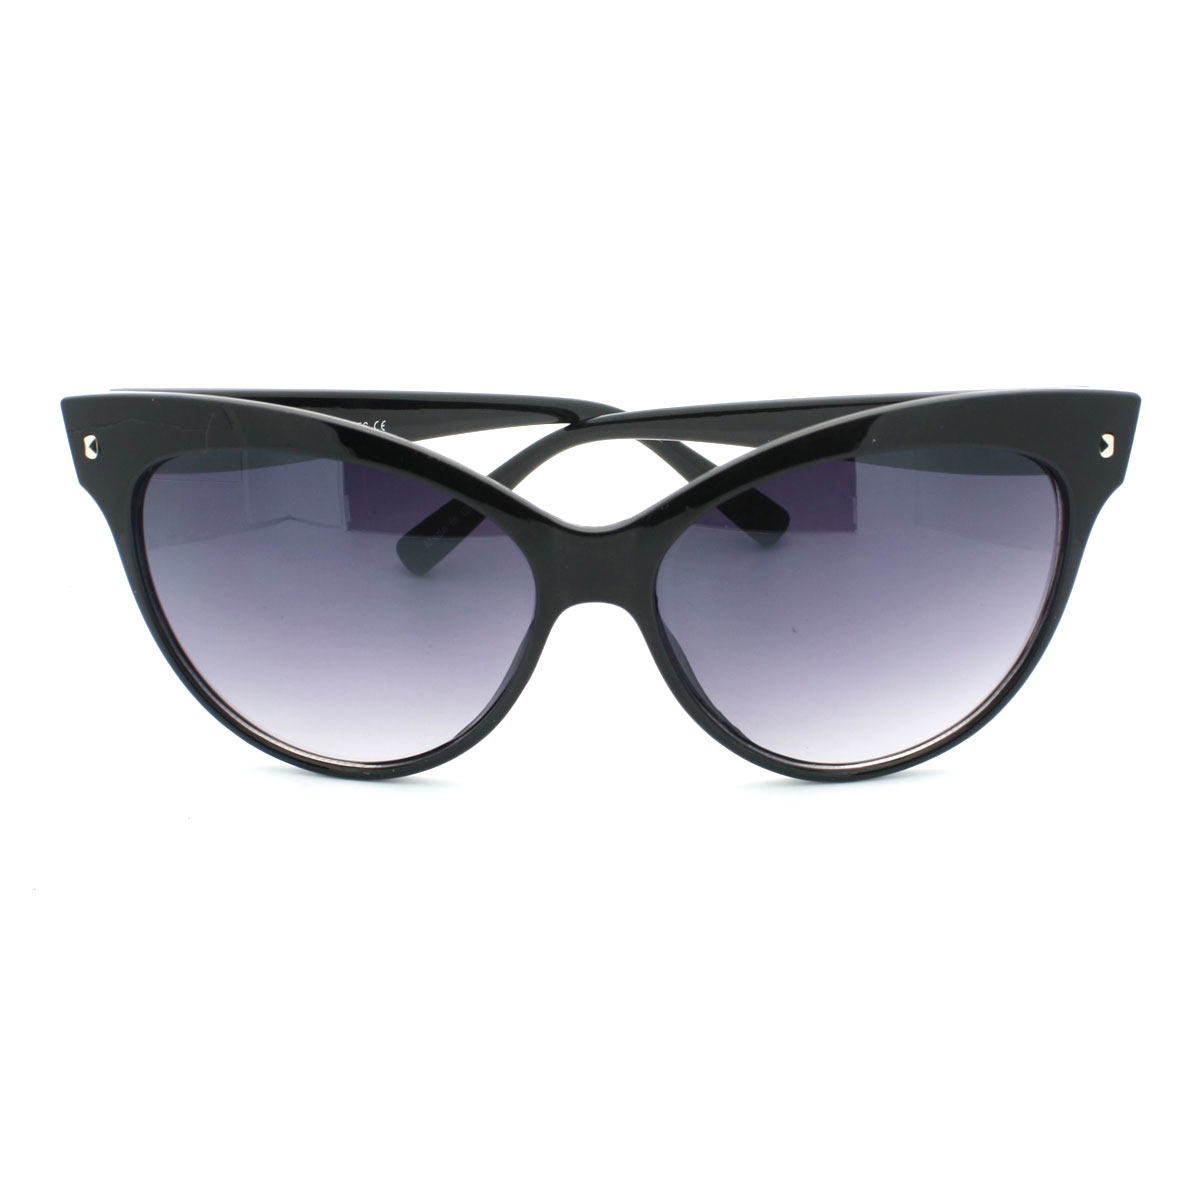 Chic High Fashion Cat Eye Style Sunglasses | eBay